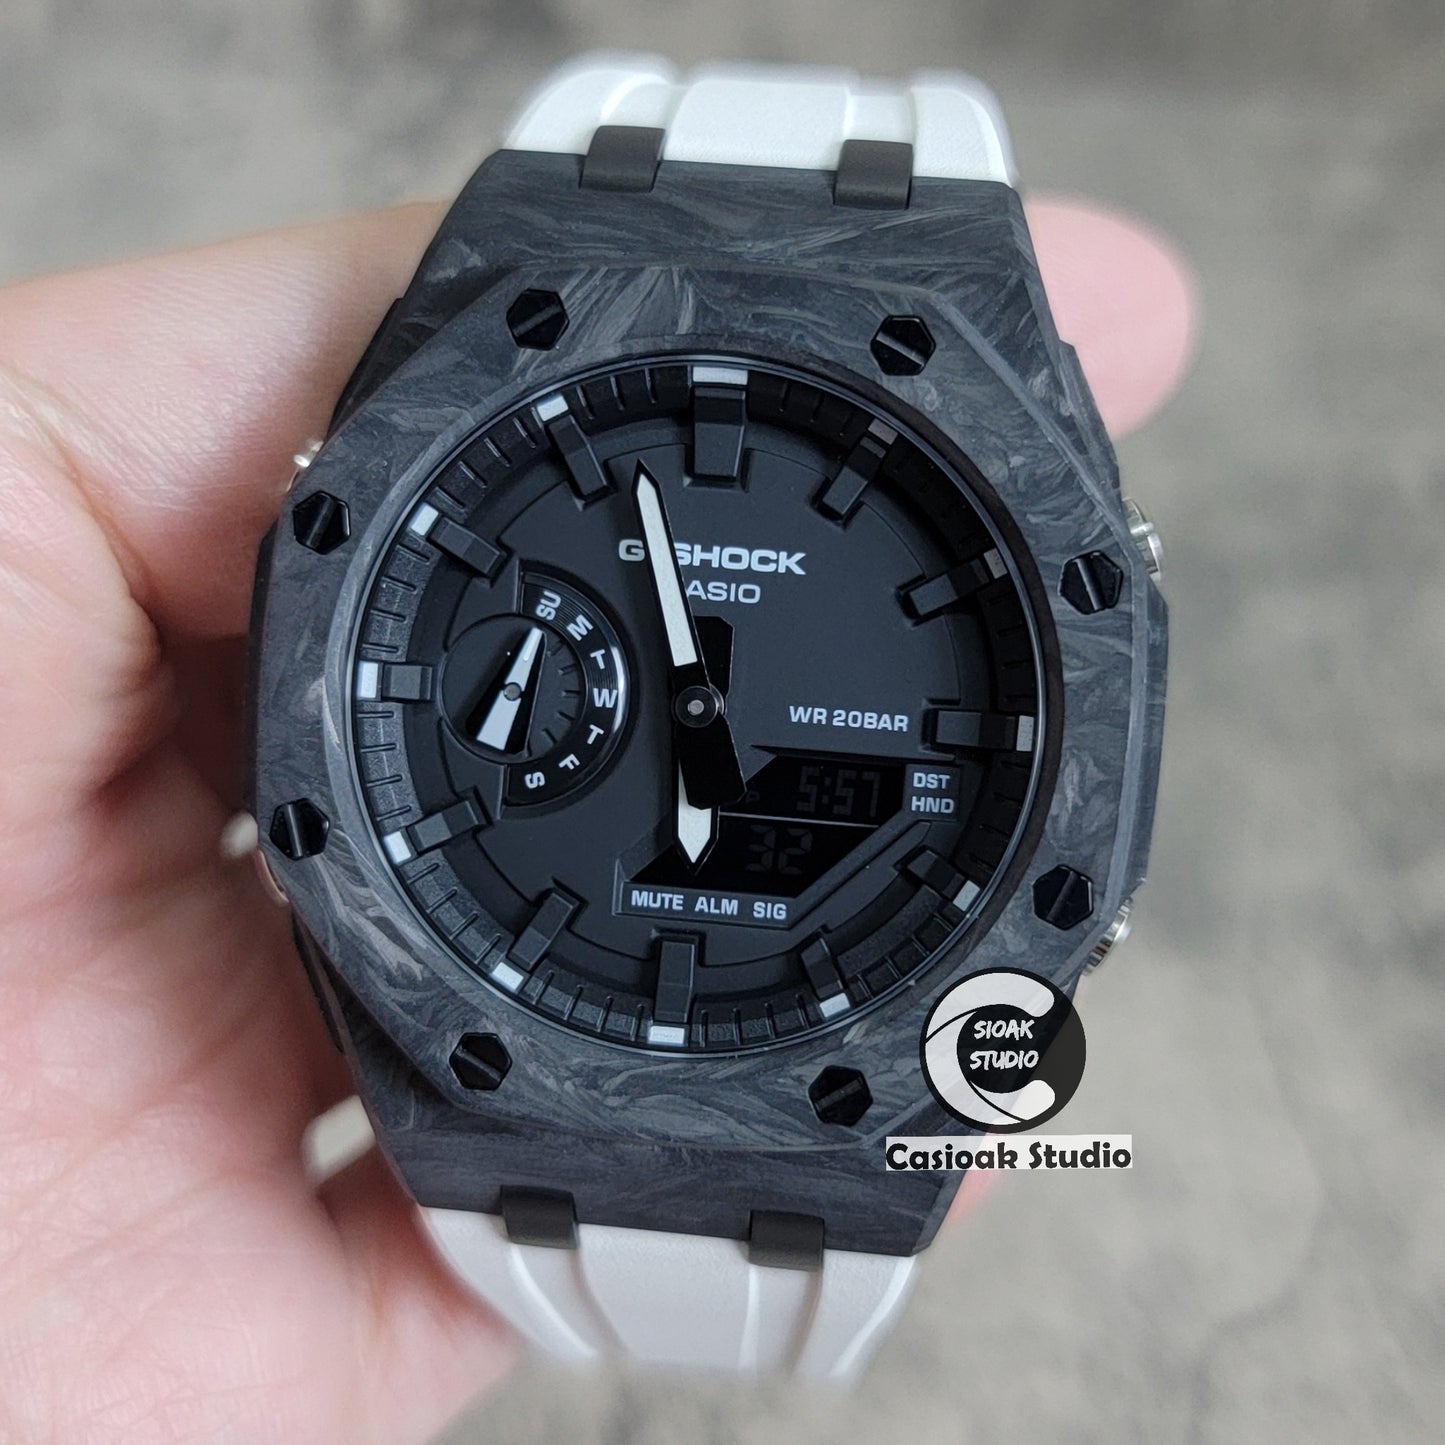 Casioak Mod Watch Carbon Fiber Offshore Superior Black Case White Strap Black Time Mark Black Dial 44mm - Casioak Studio